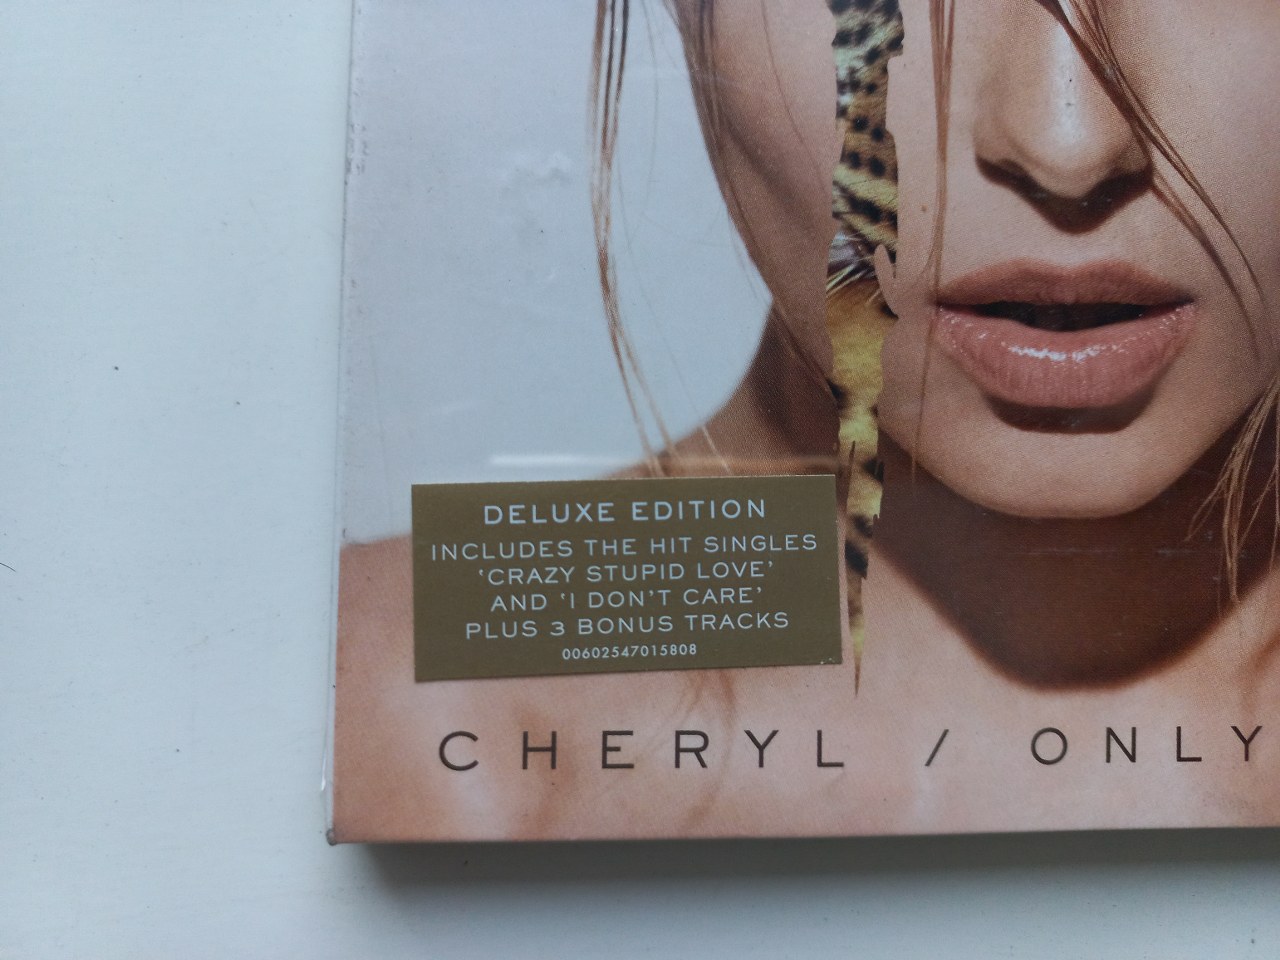 602547015808 Cheryl – Only Human CD Album Deluxe Edition UK 2014